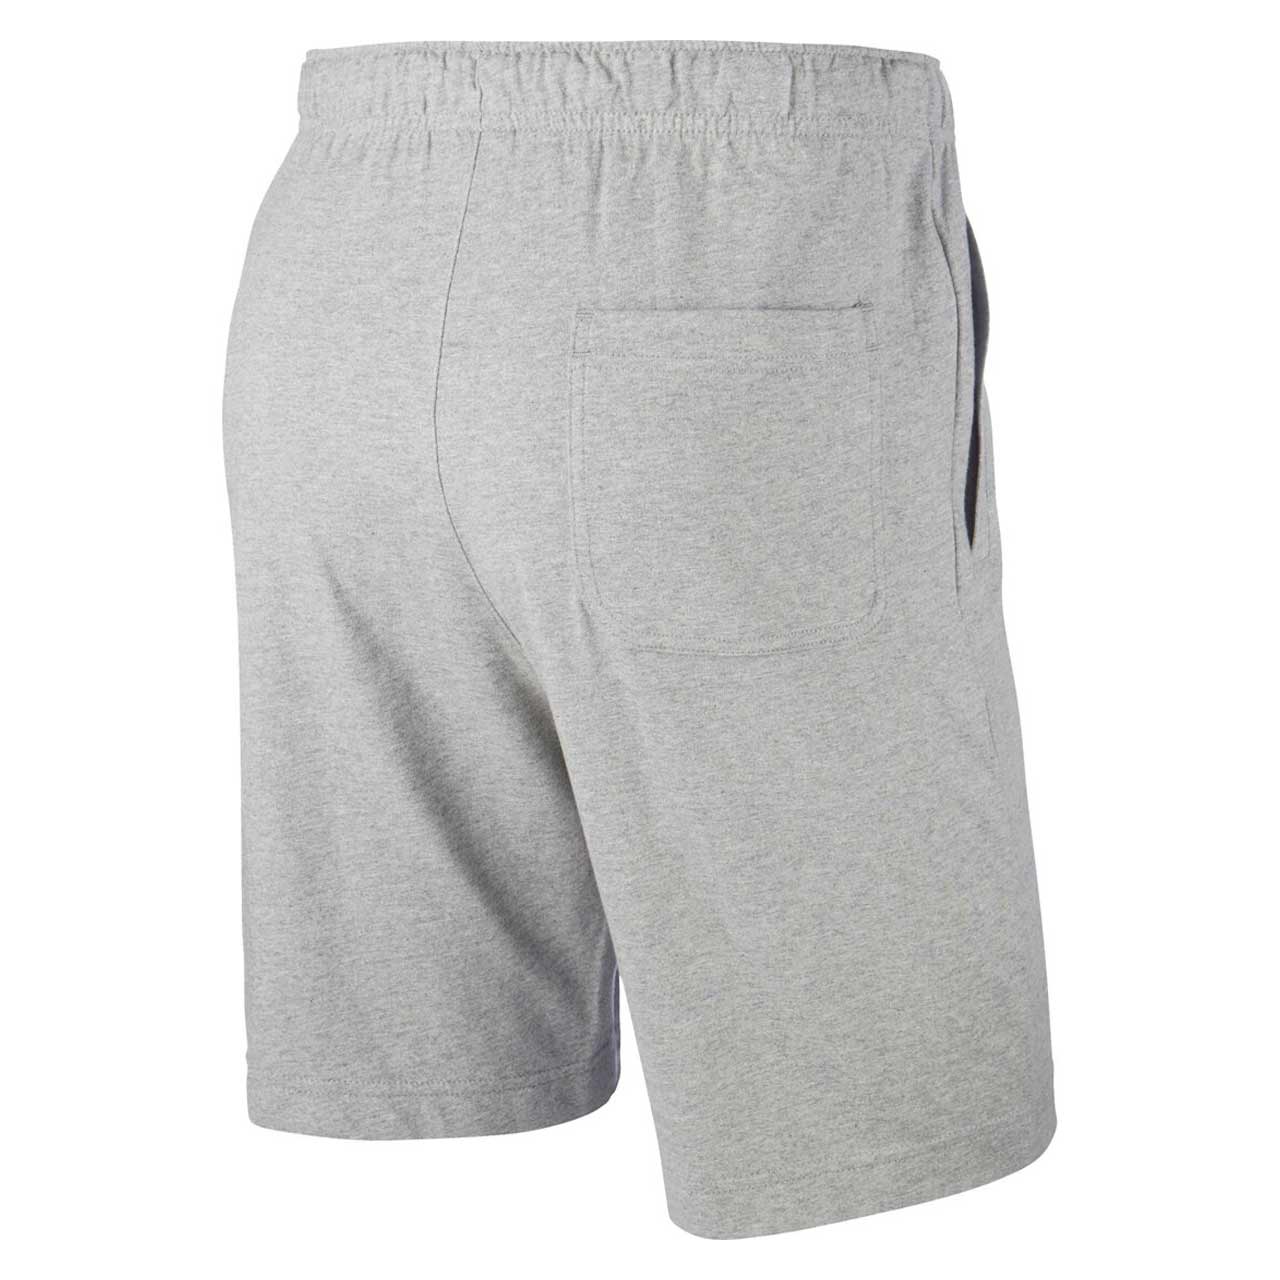 Herren Sporthose Club Shorts